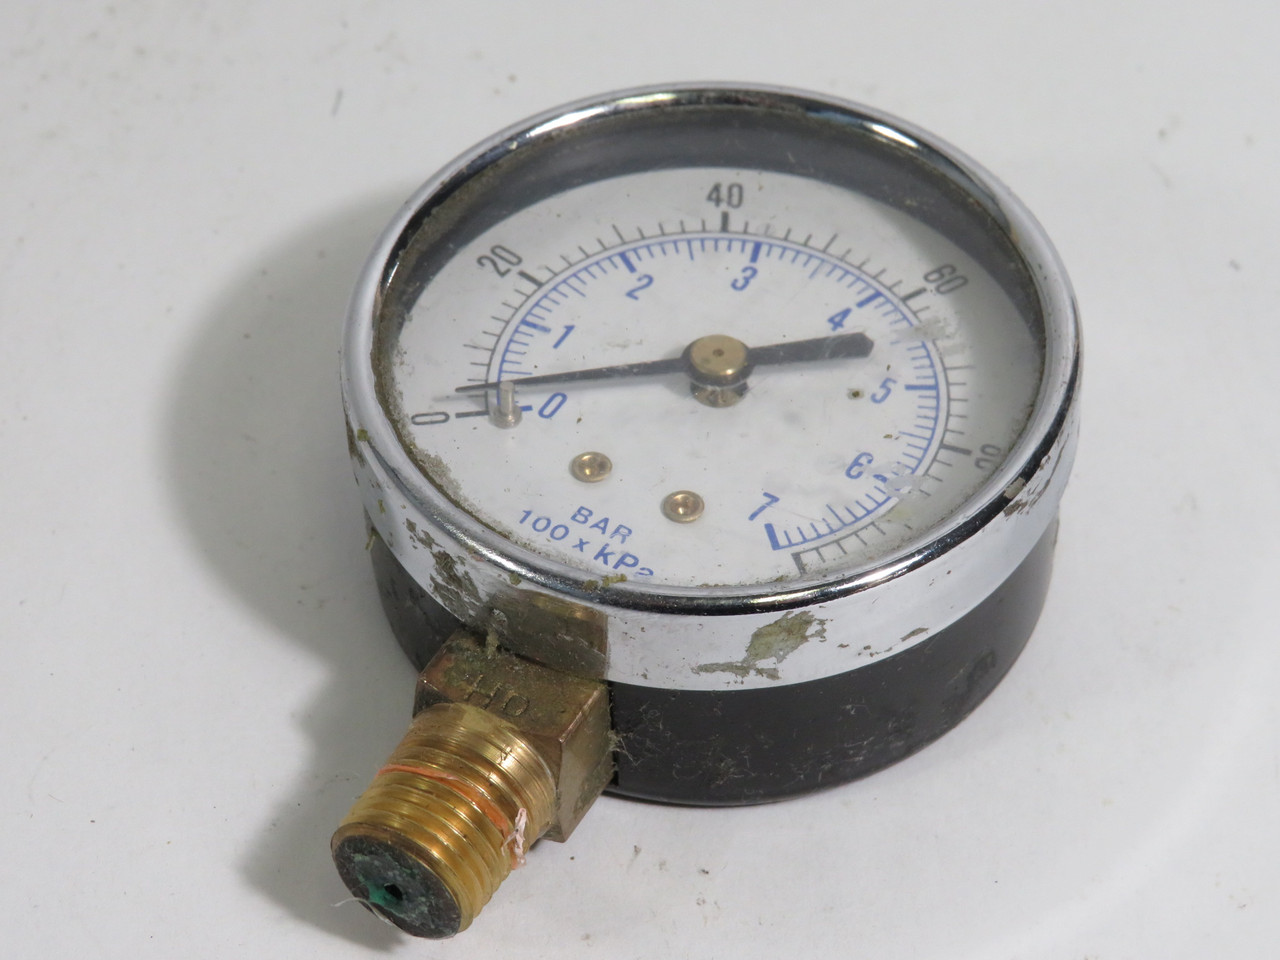 Generic 0-100 Pressure Gauge 2" Dial Bottom Port 1/4" COSMETIC DAMAGE USED